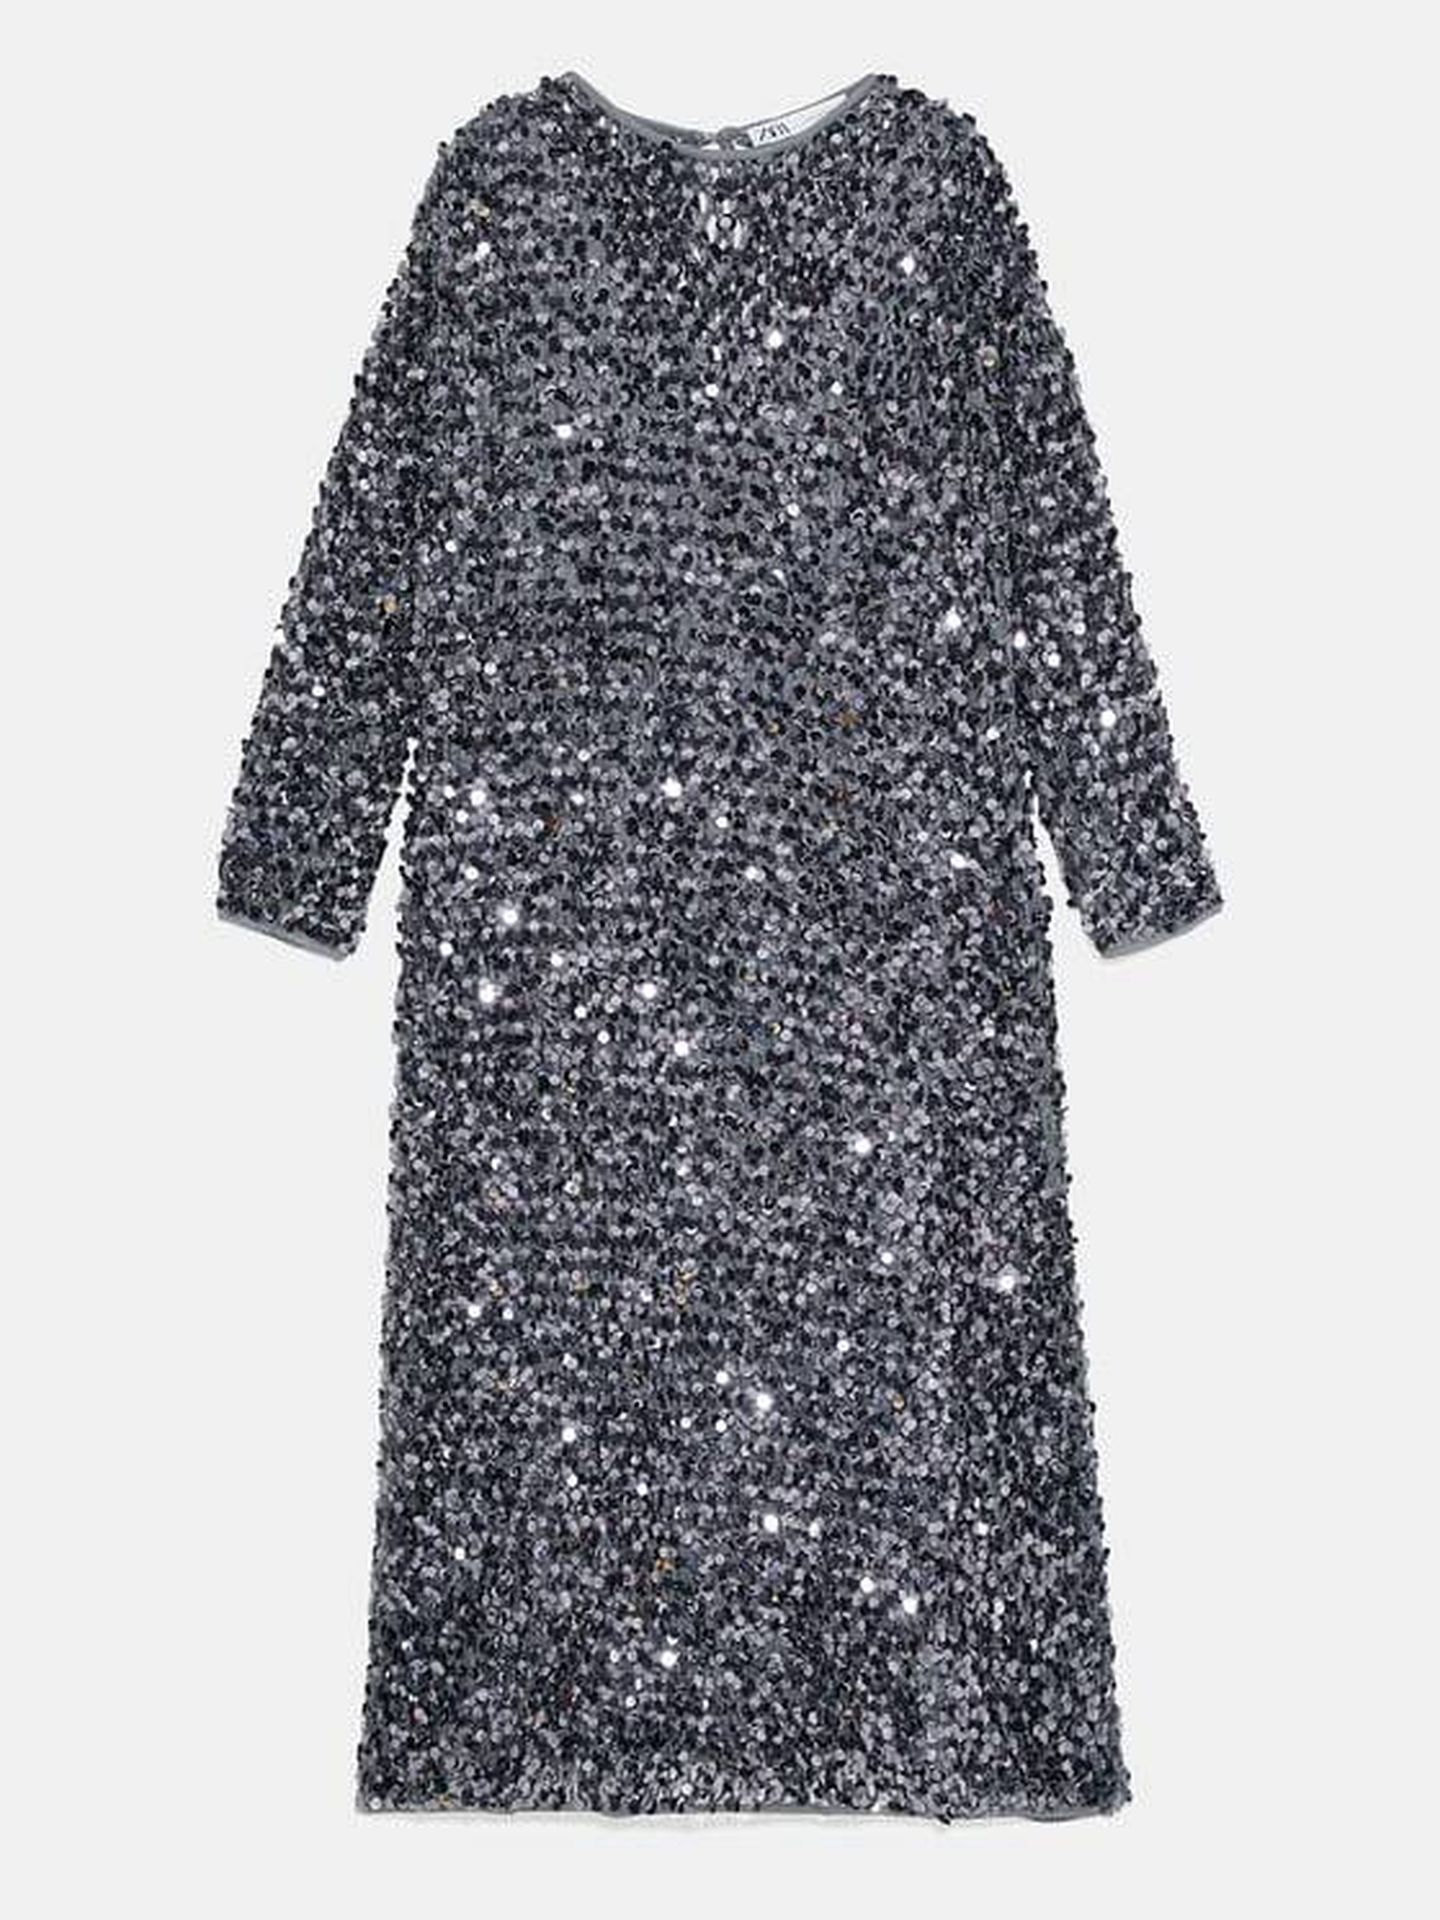 Vestido de lentejuelas de Zara (79,95 €).